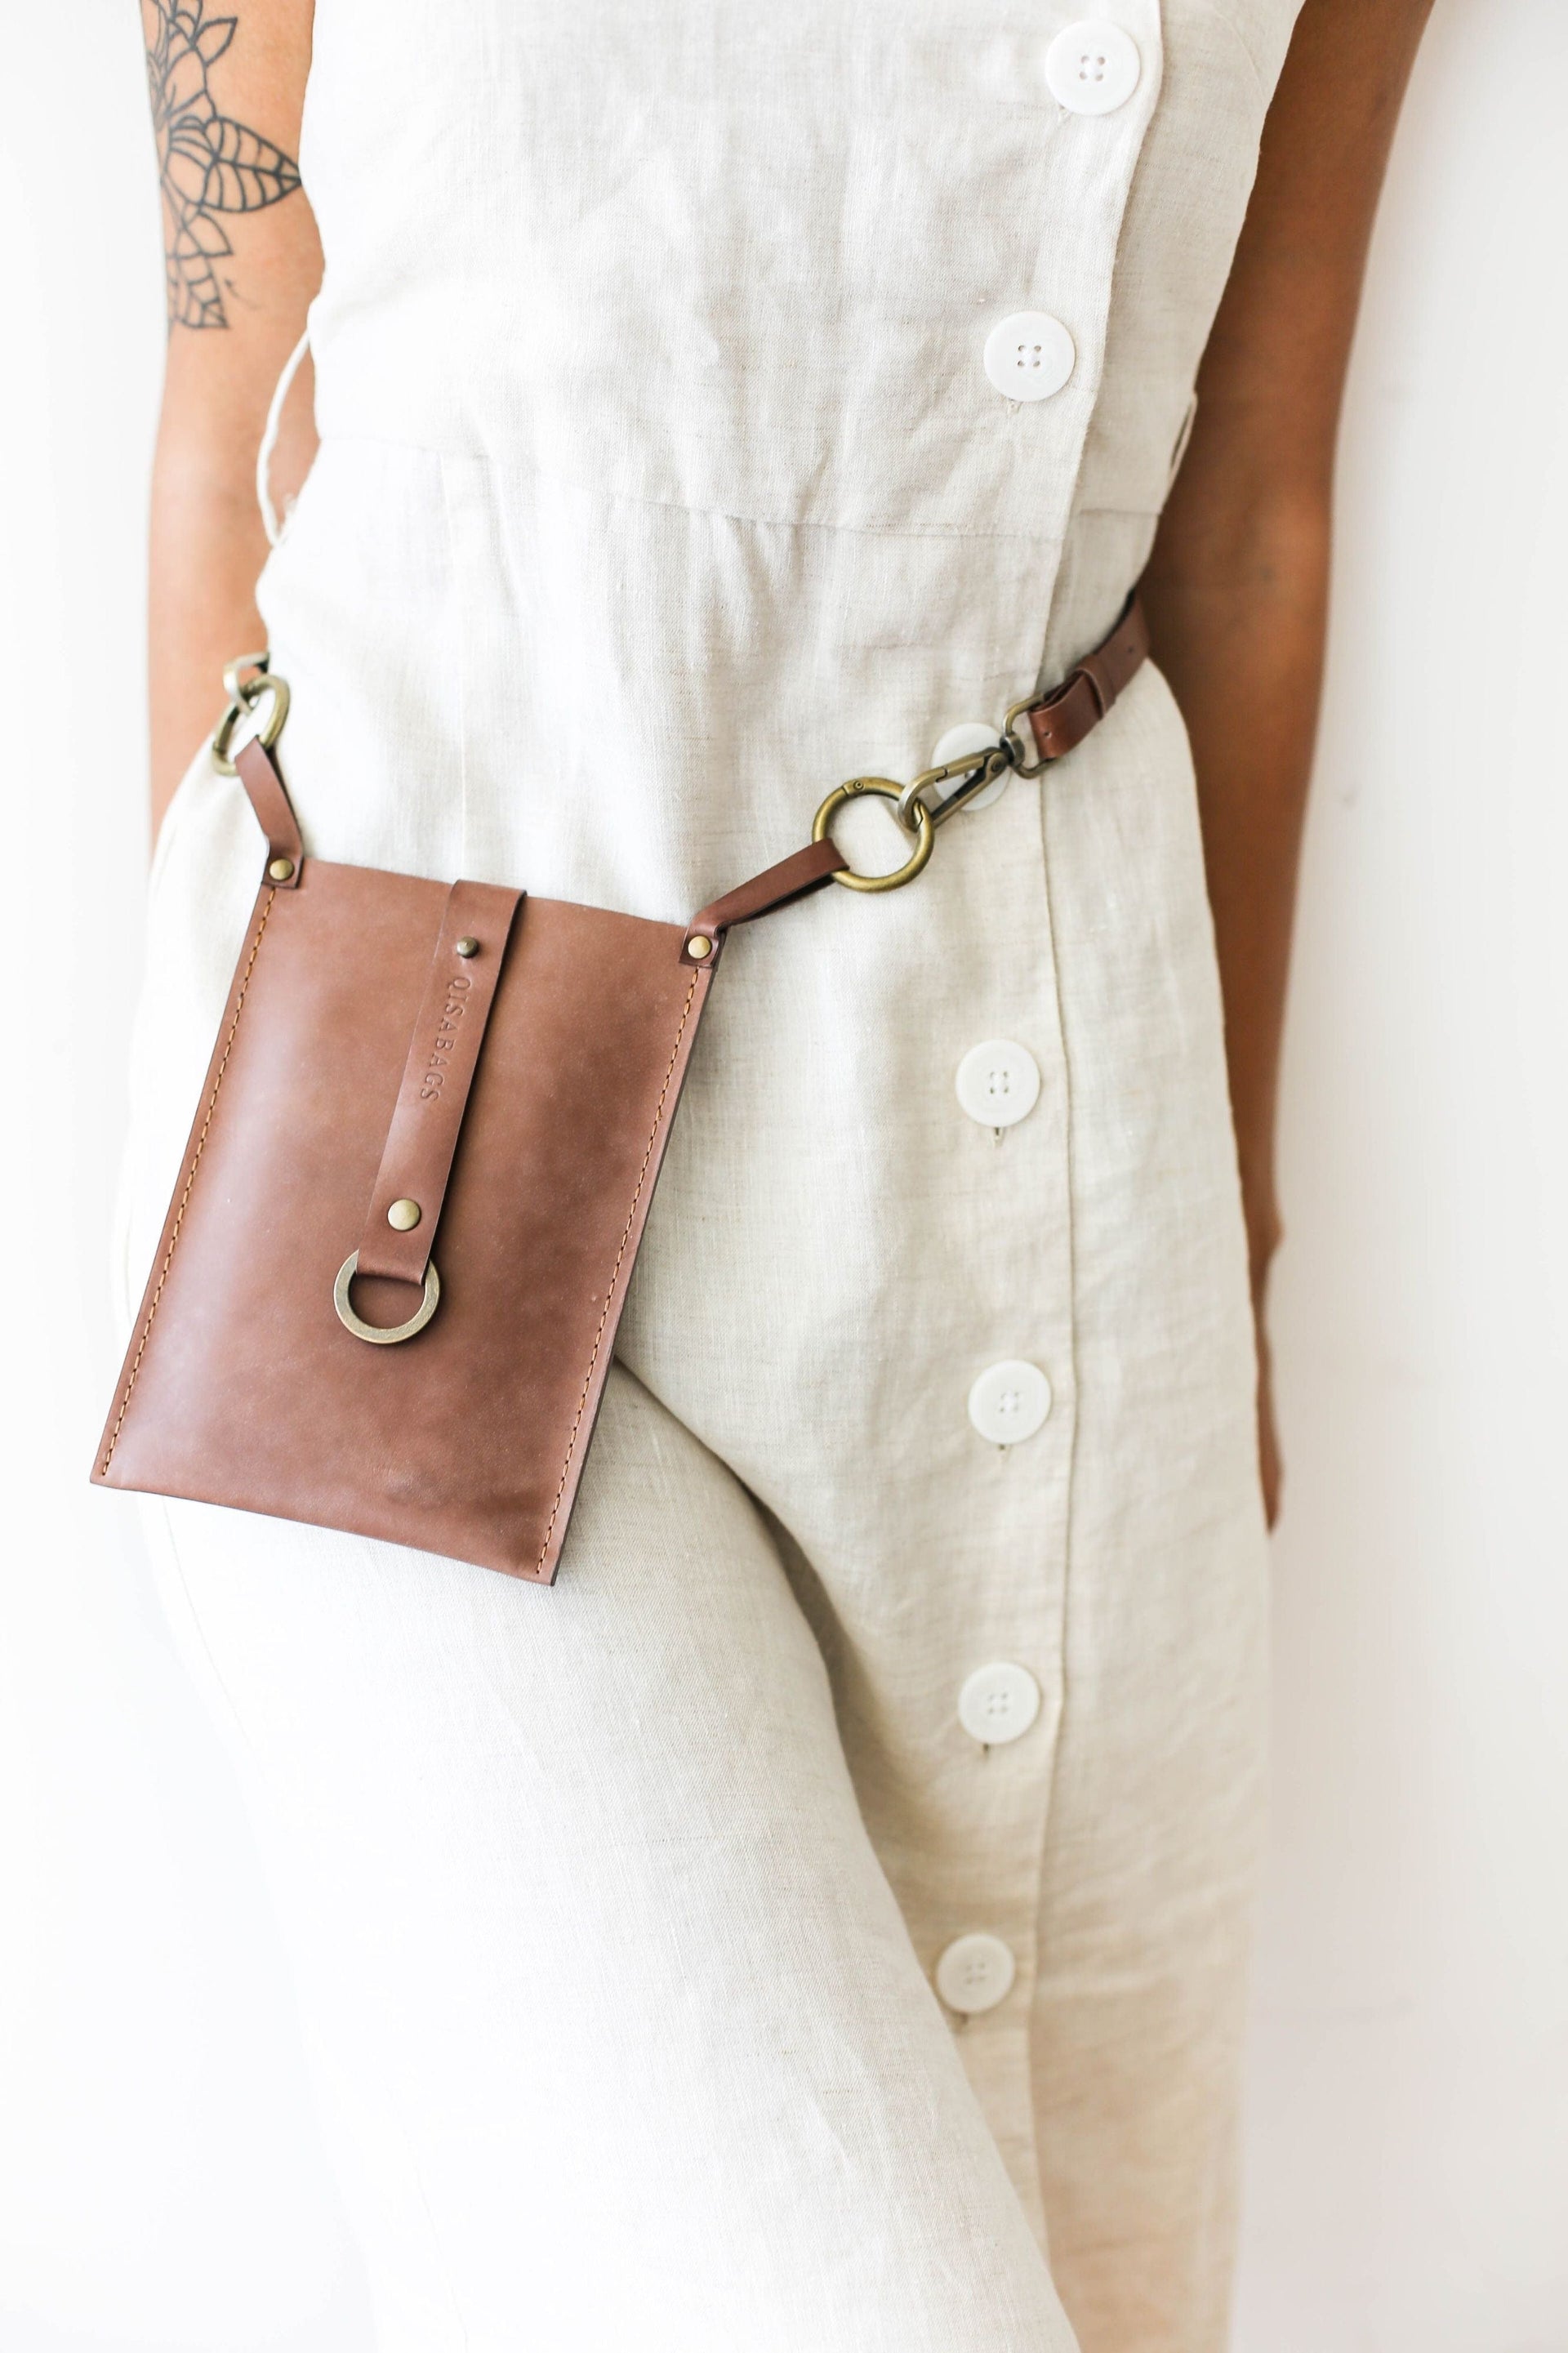 Designer leather bag for phone